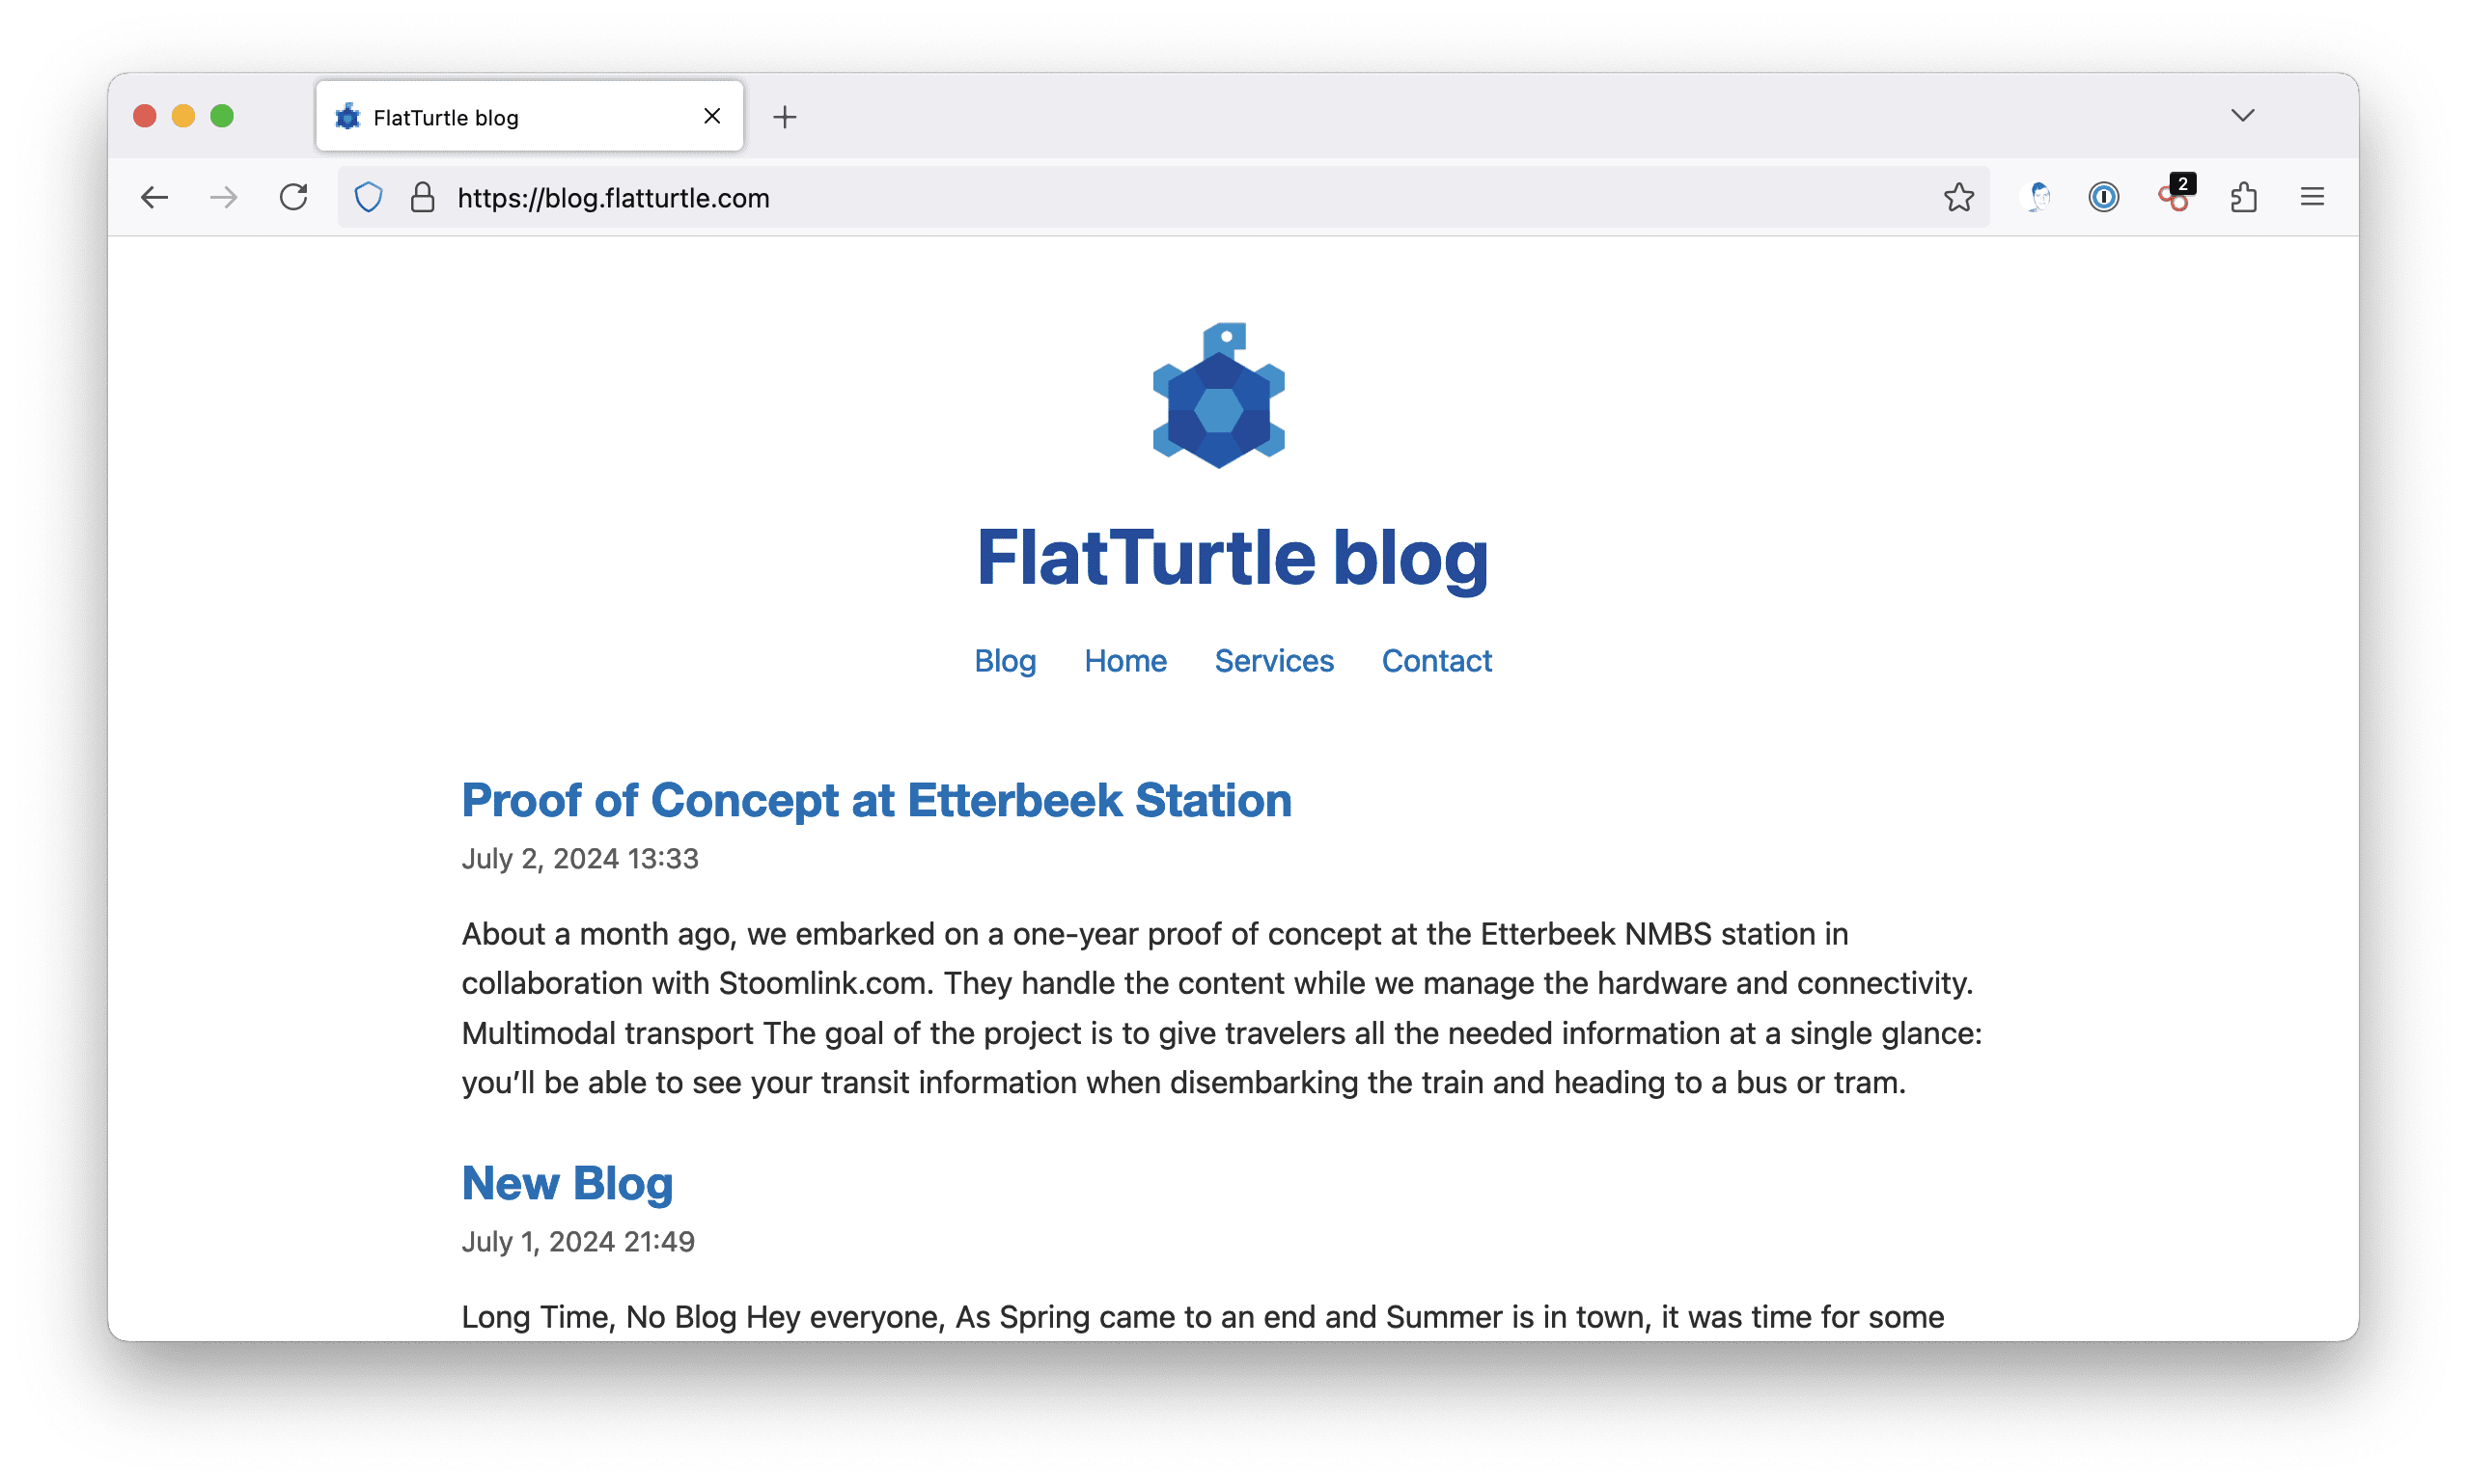 FlatTurtle blog